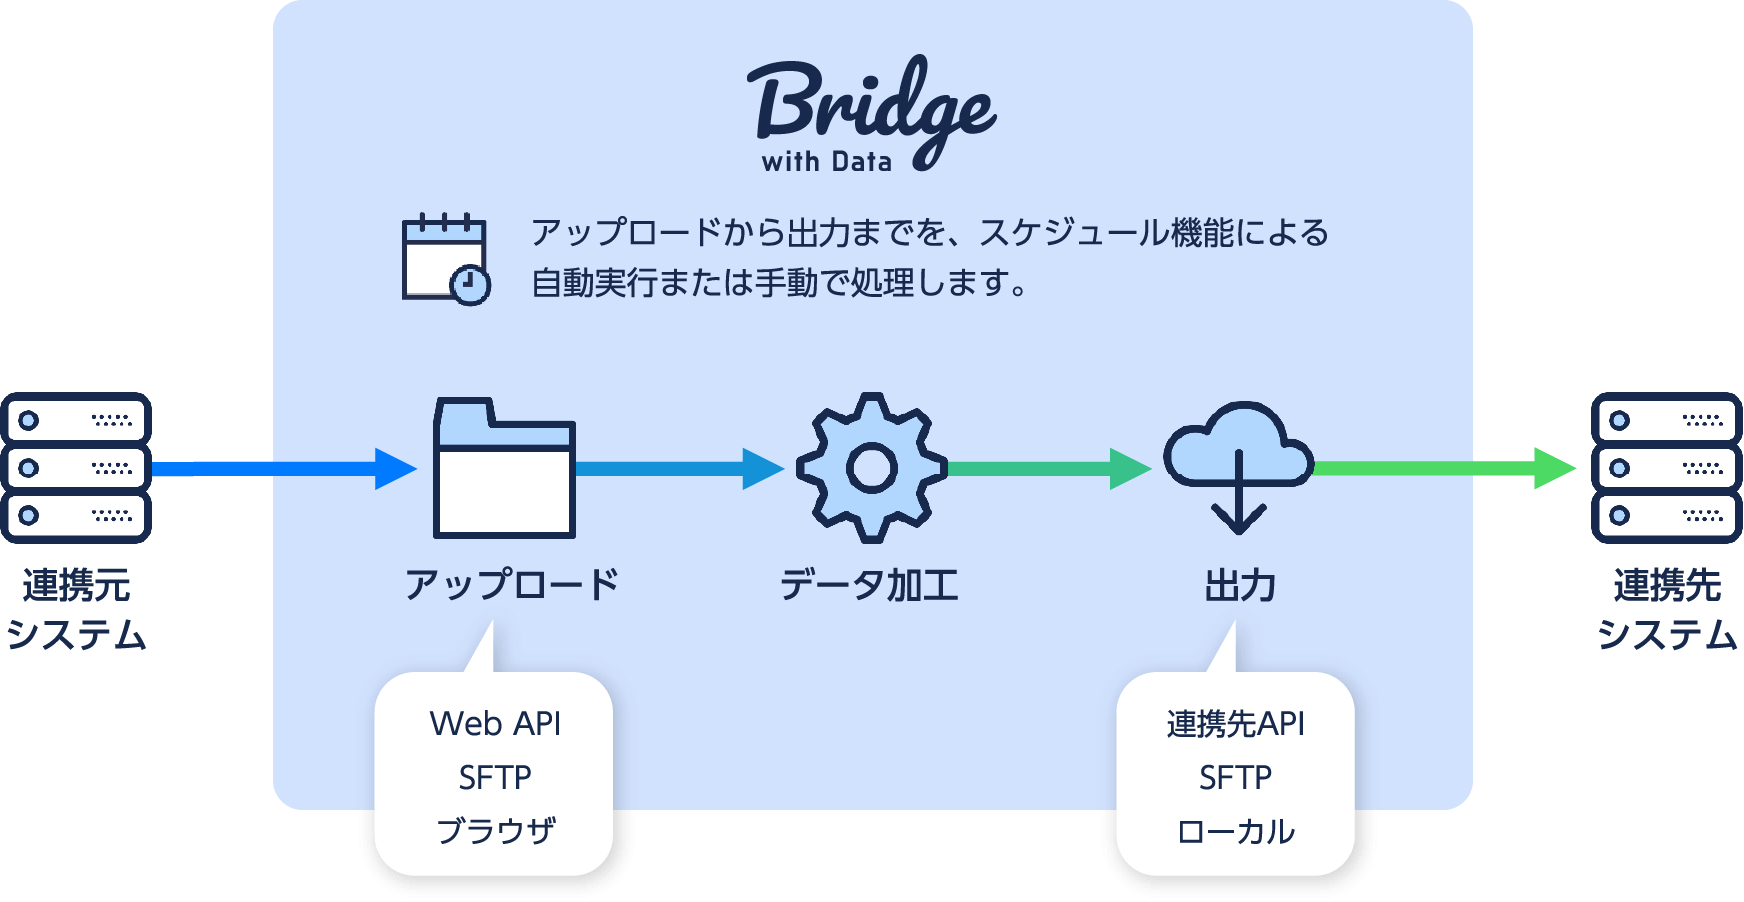 Bridge アップロードから出力までを、スケジュール機能による自動実行または手動で処理します。